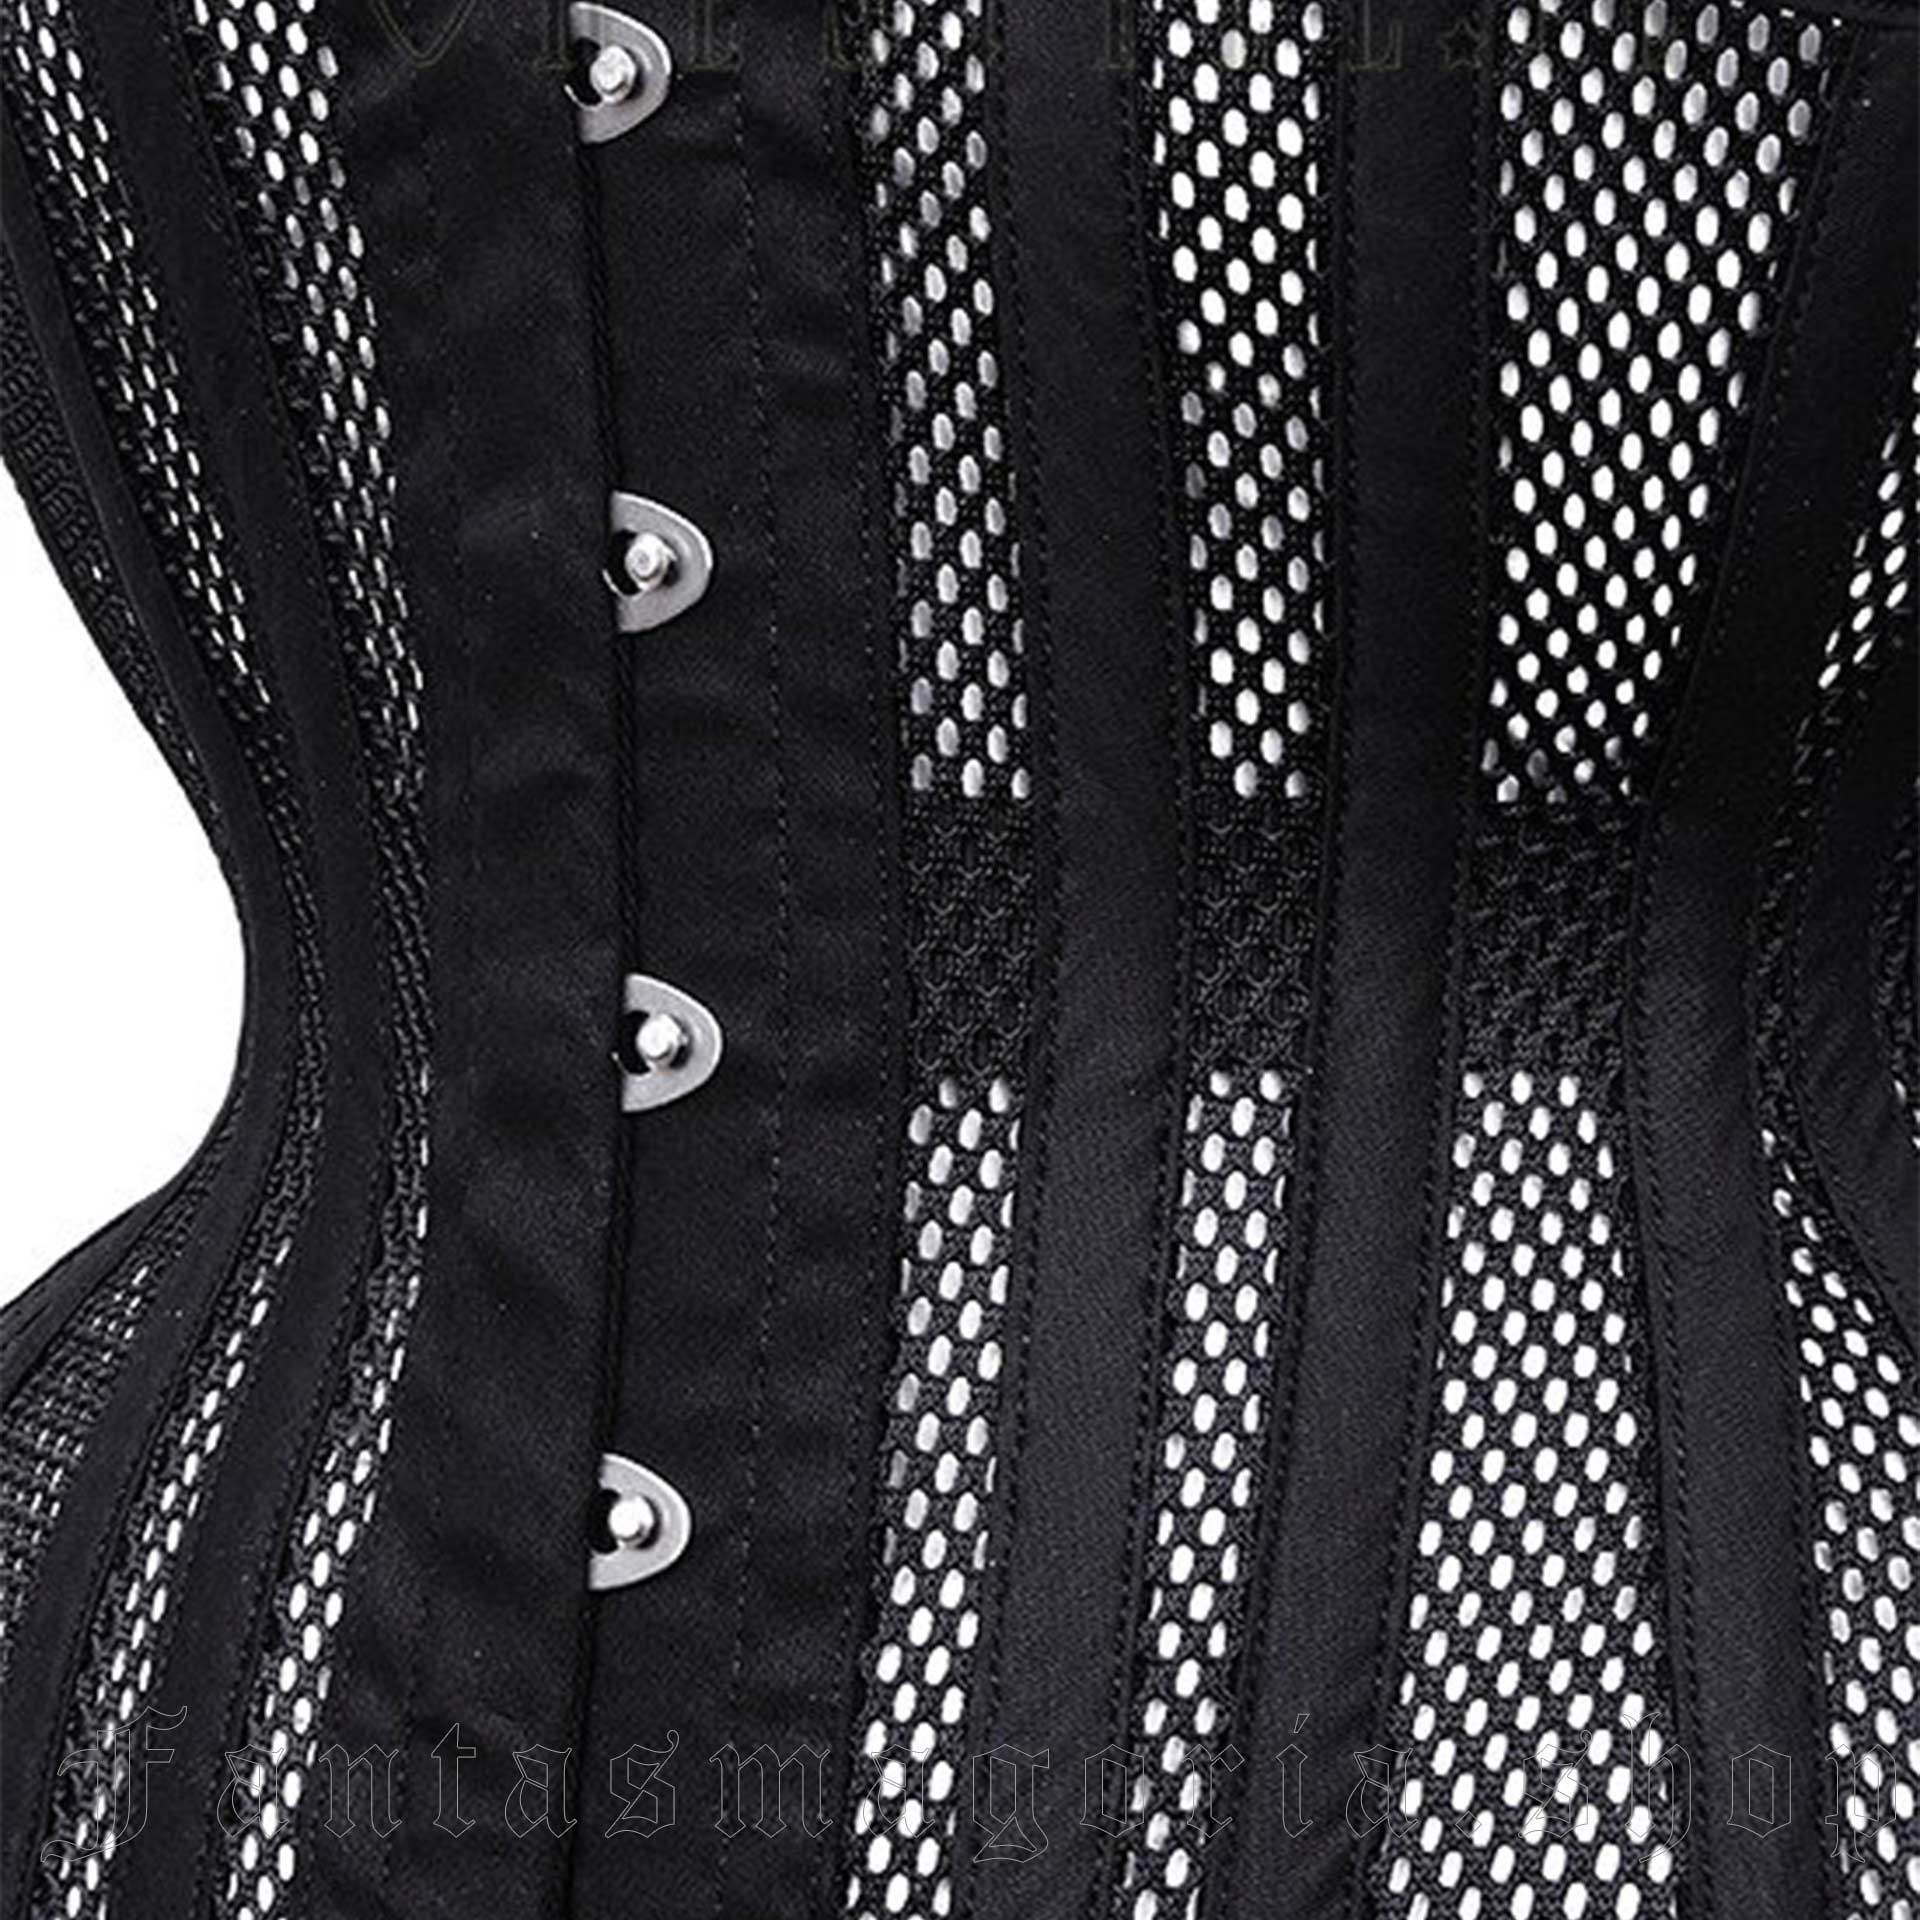 SKELETON UNDERBUST anatomical, Black cotton corset, horror - Restyle